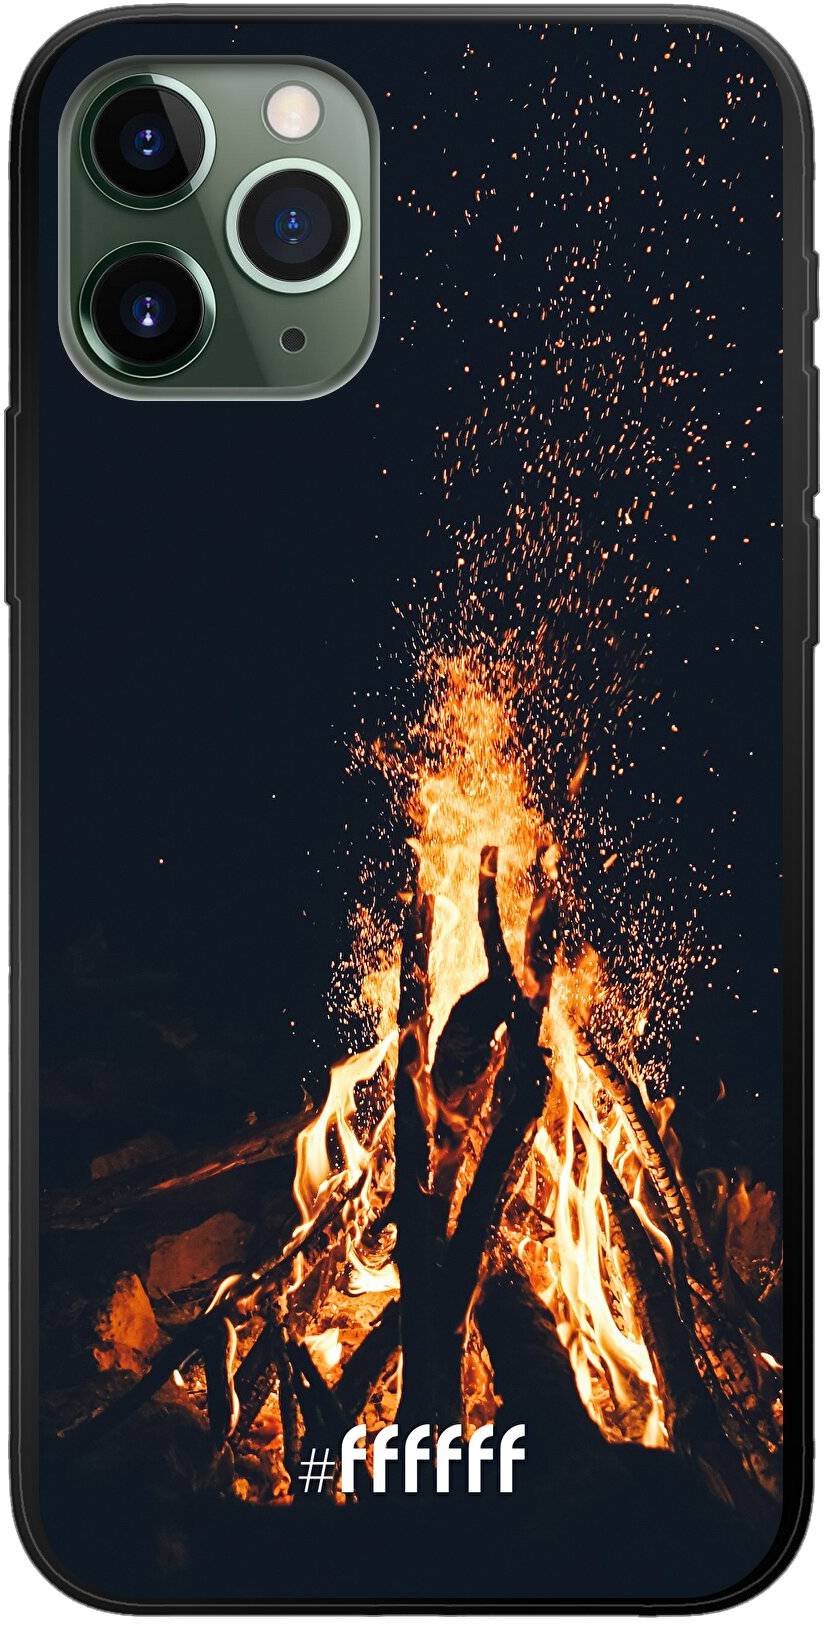 Bonfire iPhone 11 Pro